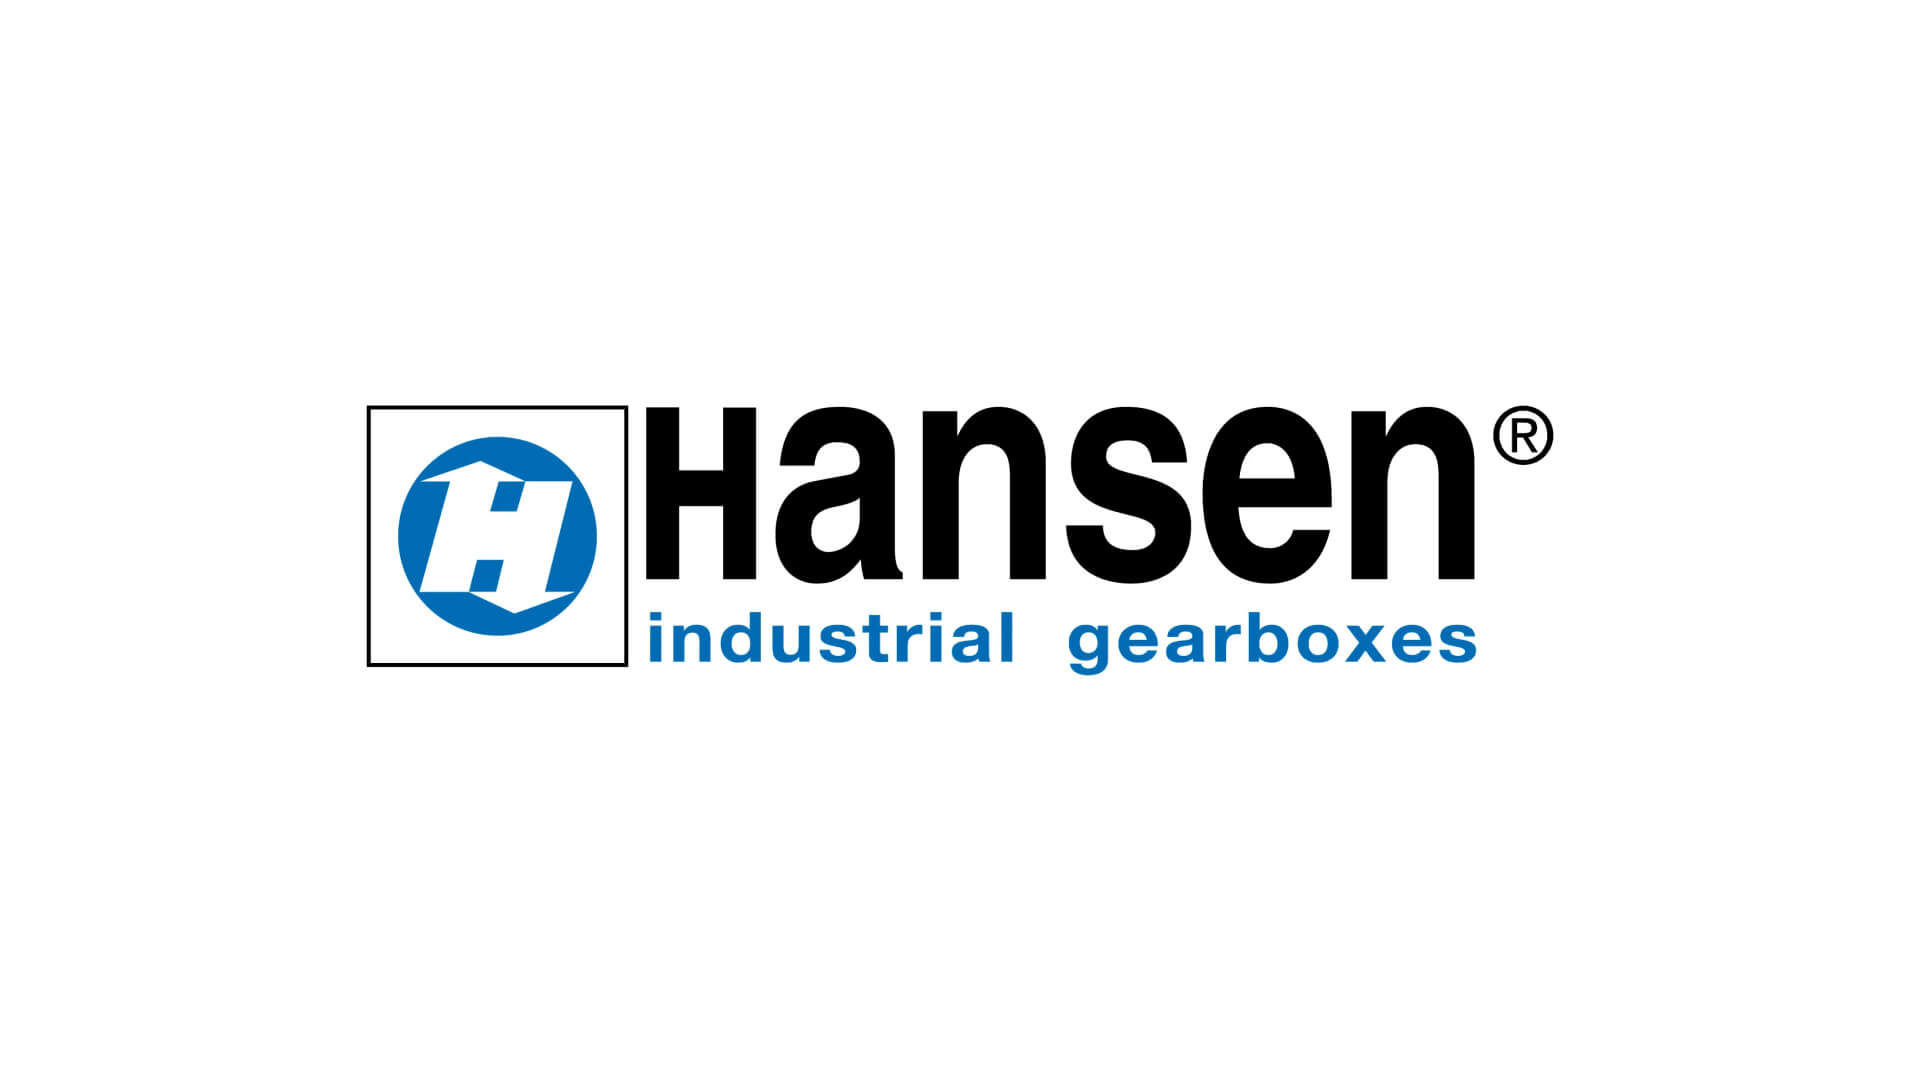 Hansen Gearboxes logo in color